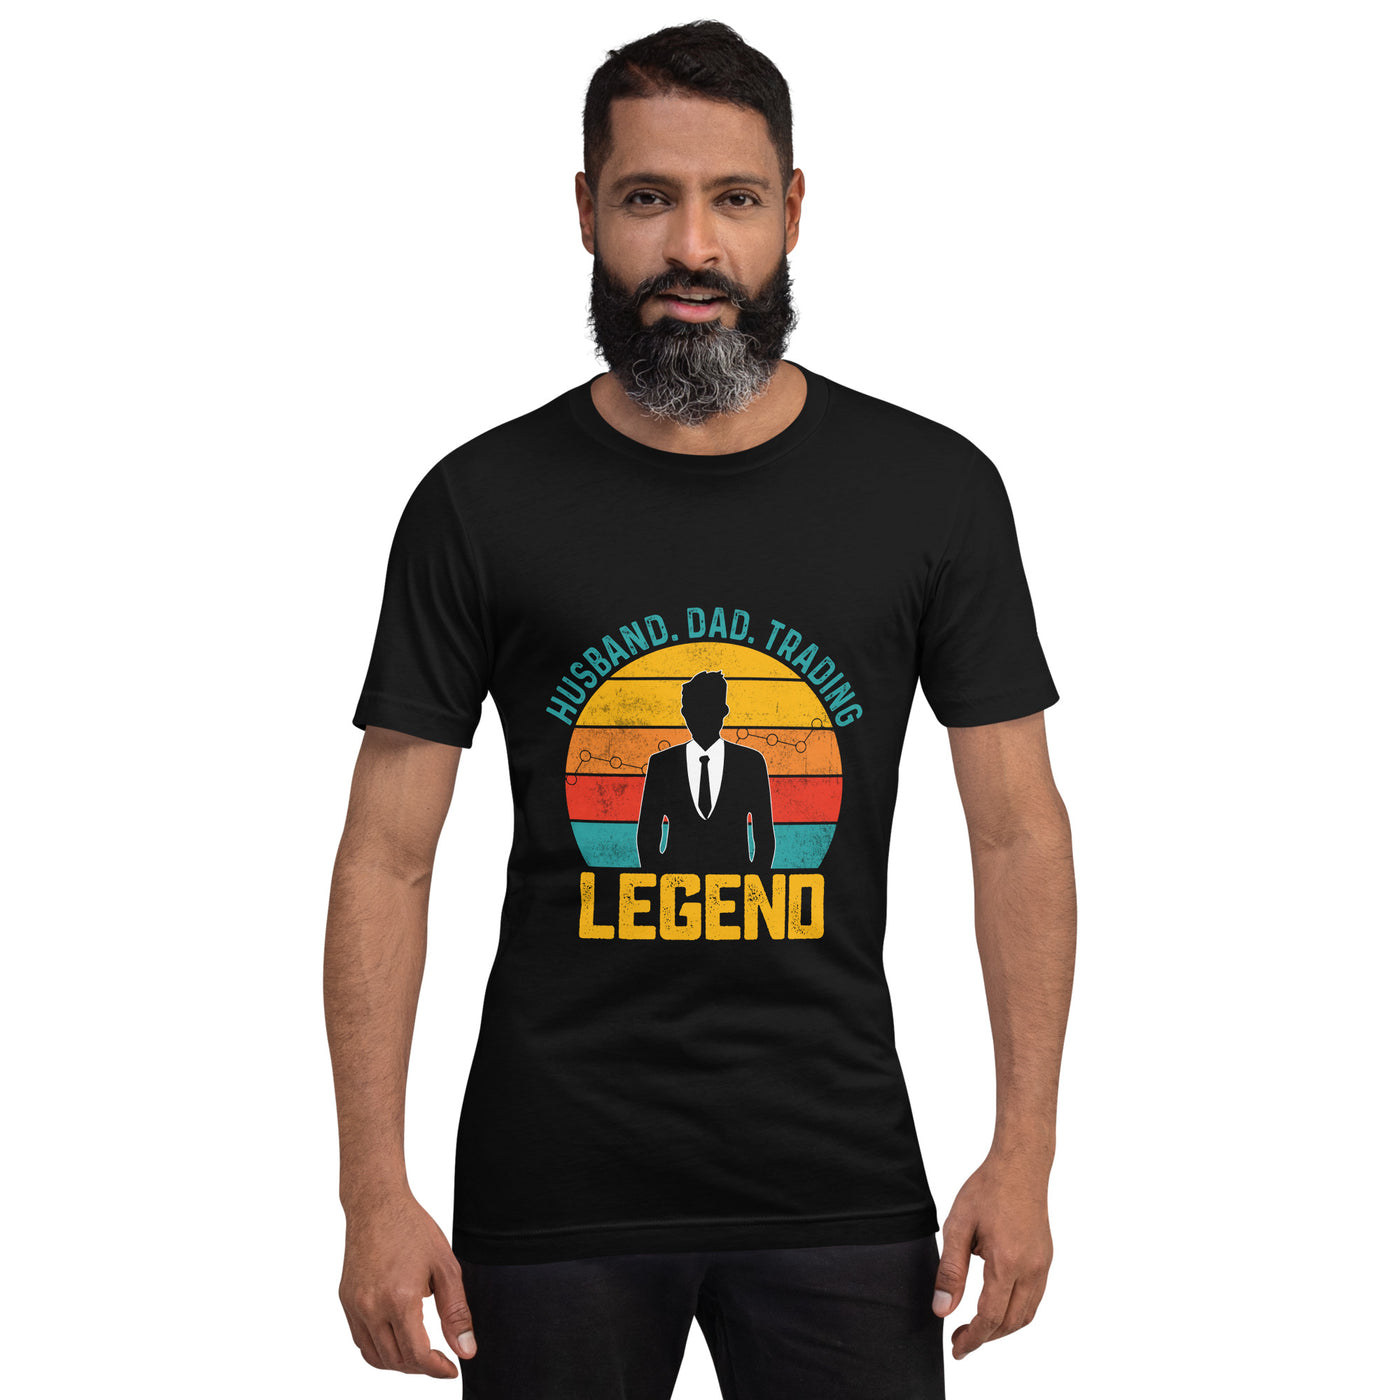 Husband.Dad.Trading Legend - Unisex t-shirt